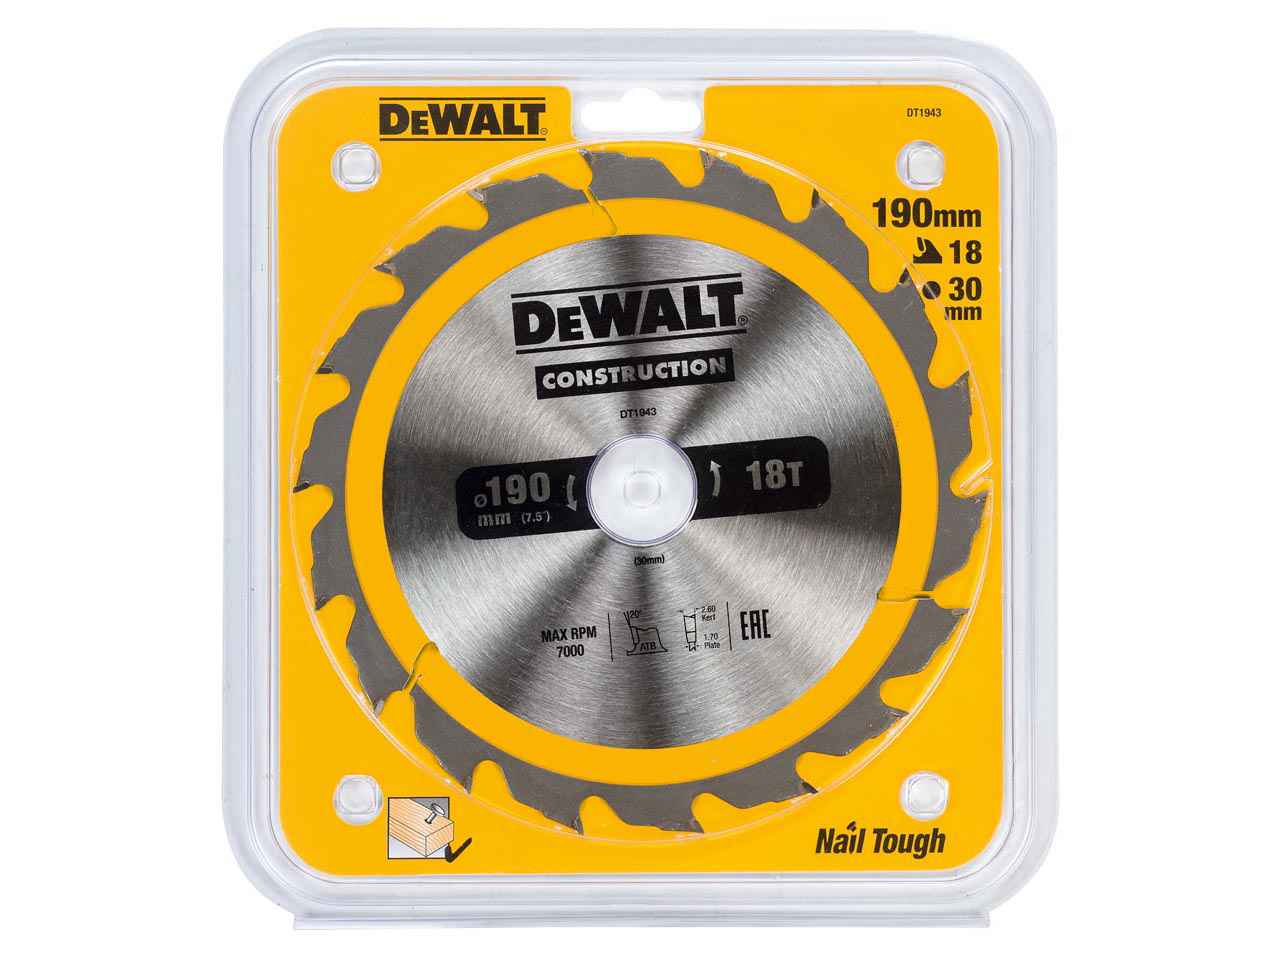 DEWALT DeWalt DT1943-QZ 190mm x 30mm x 18T Wood Construction